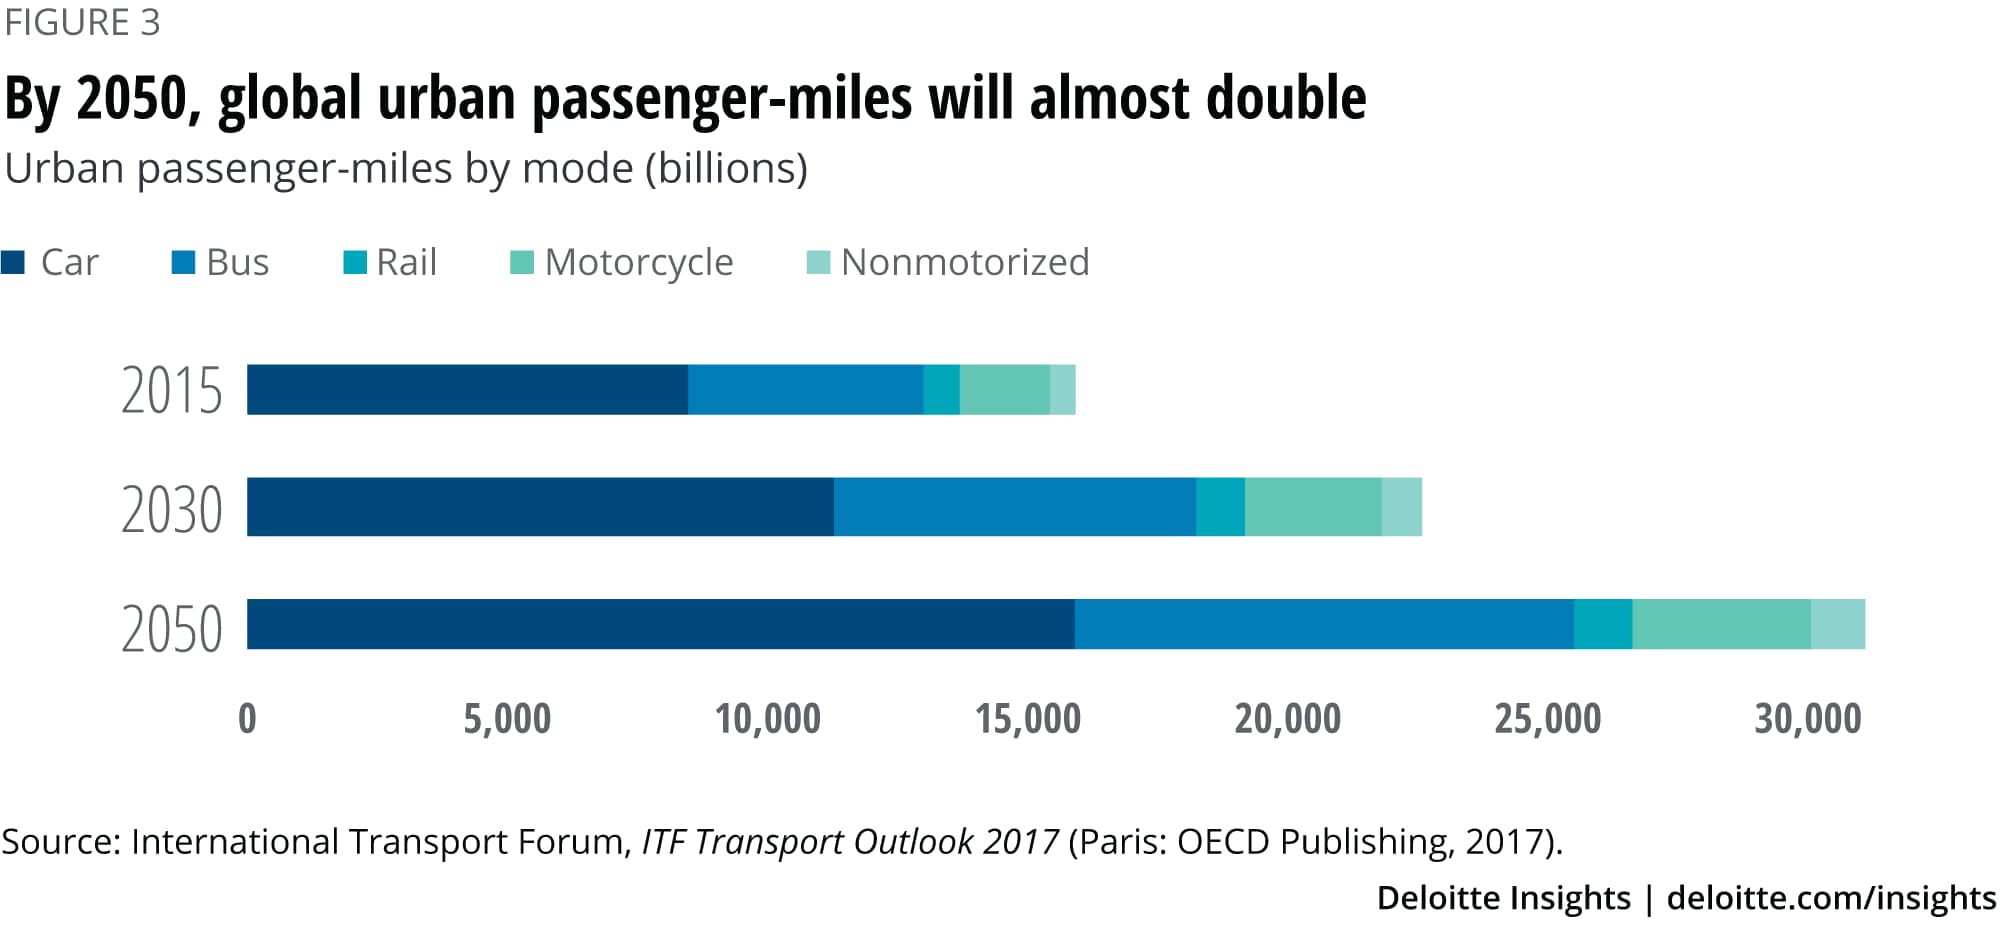 Urban passenger-miles by mode